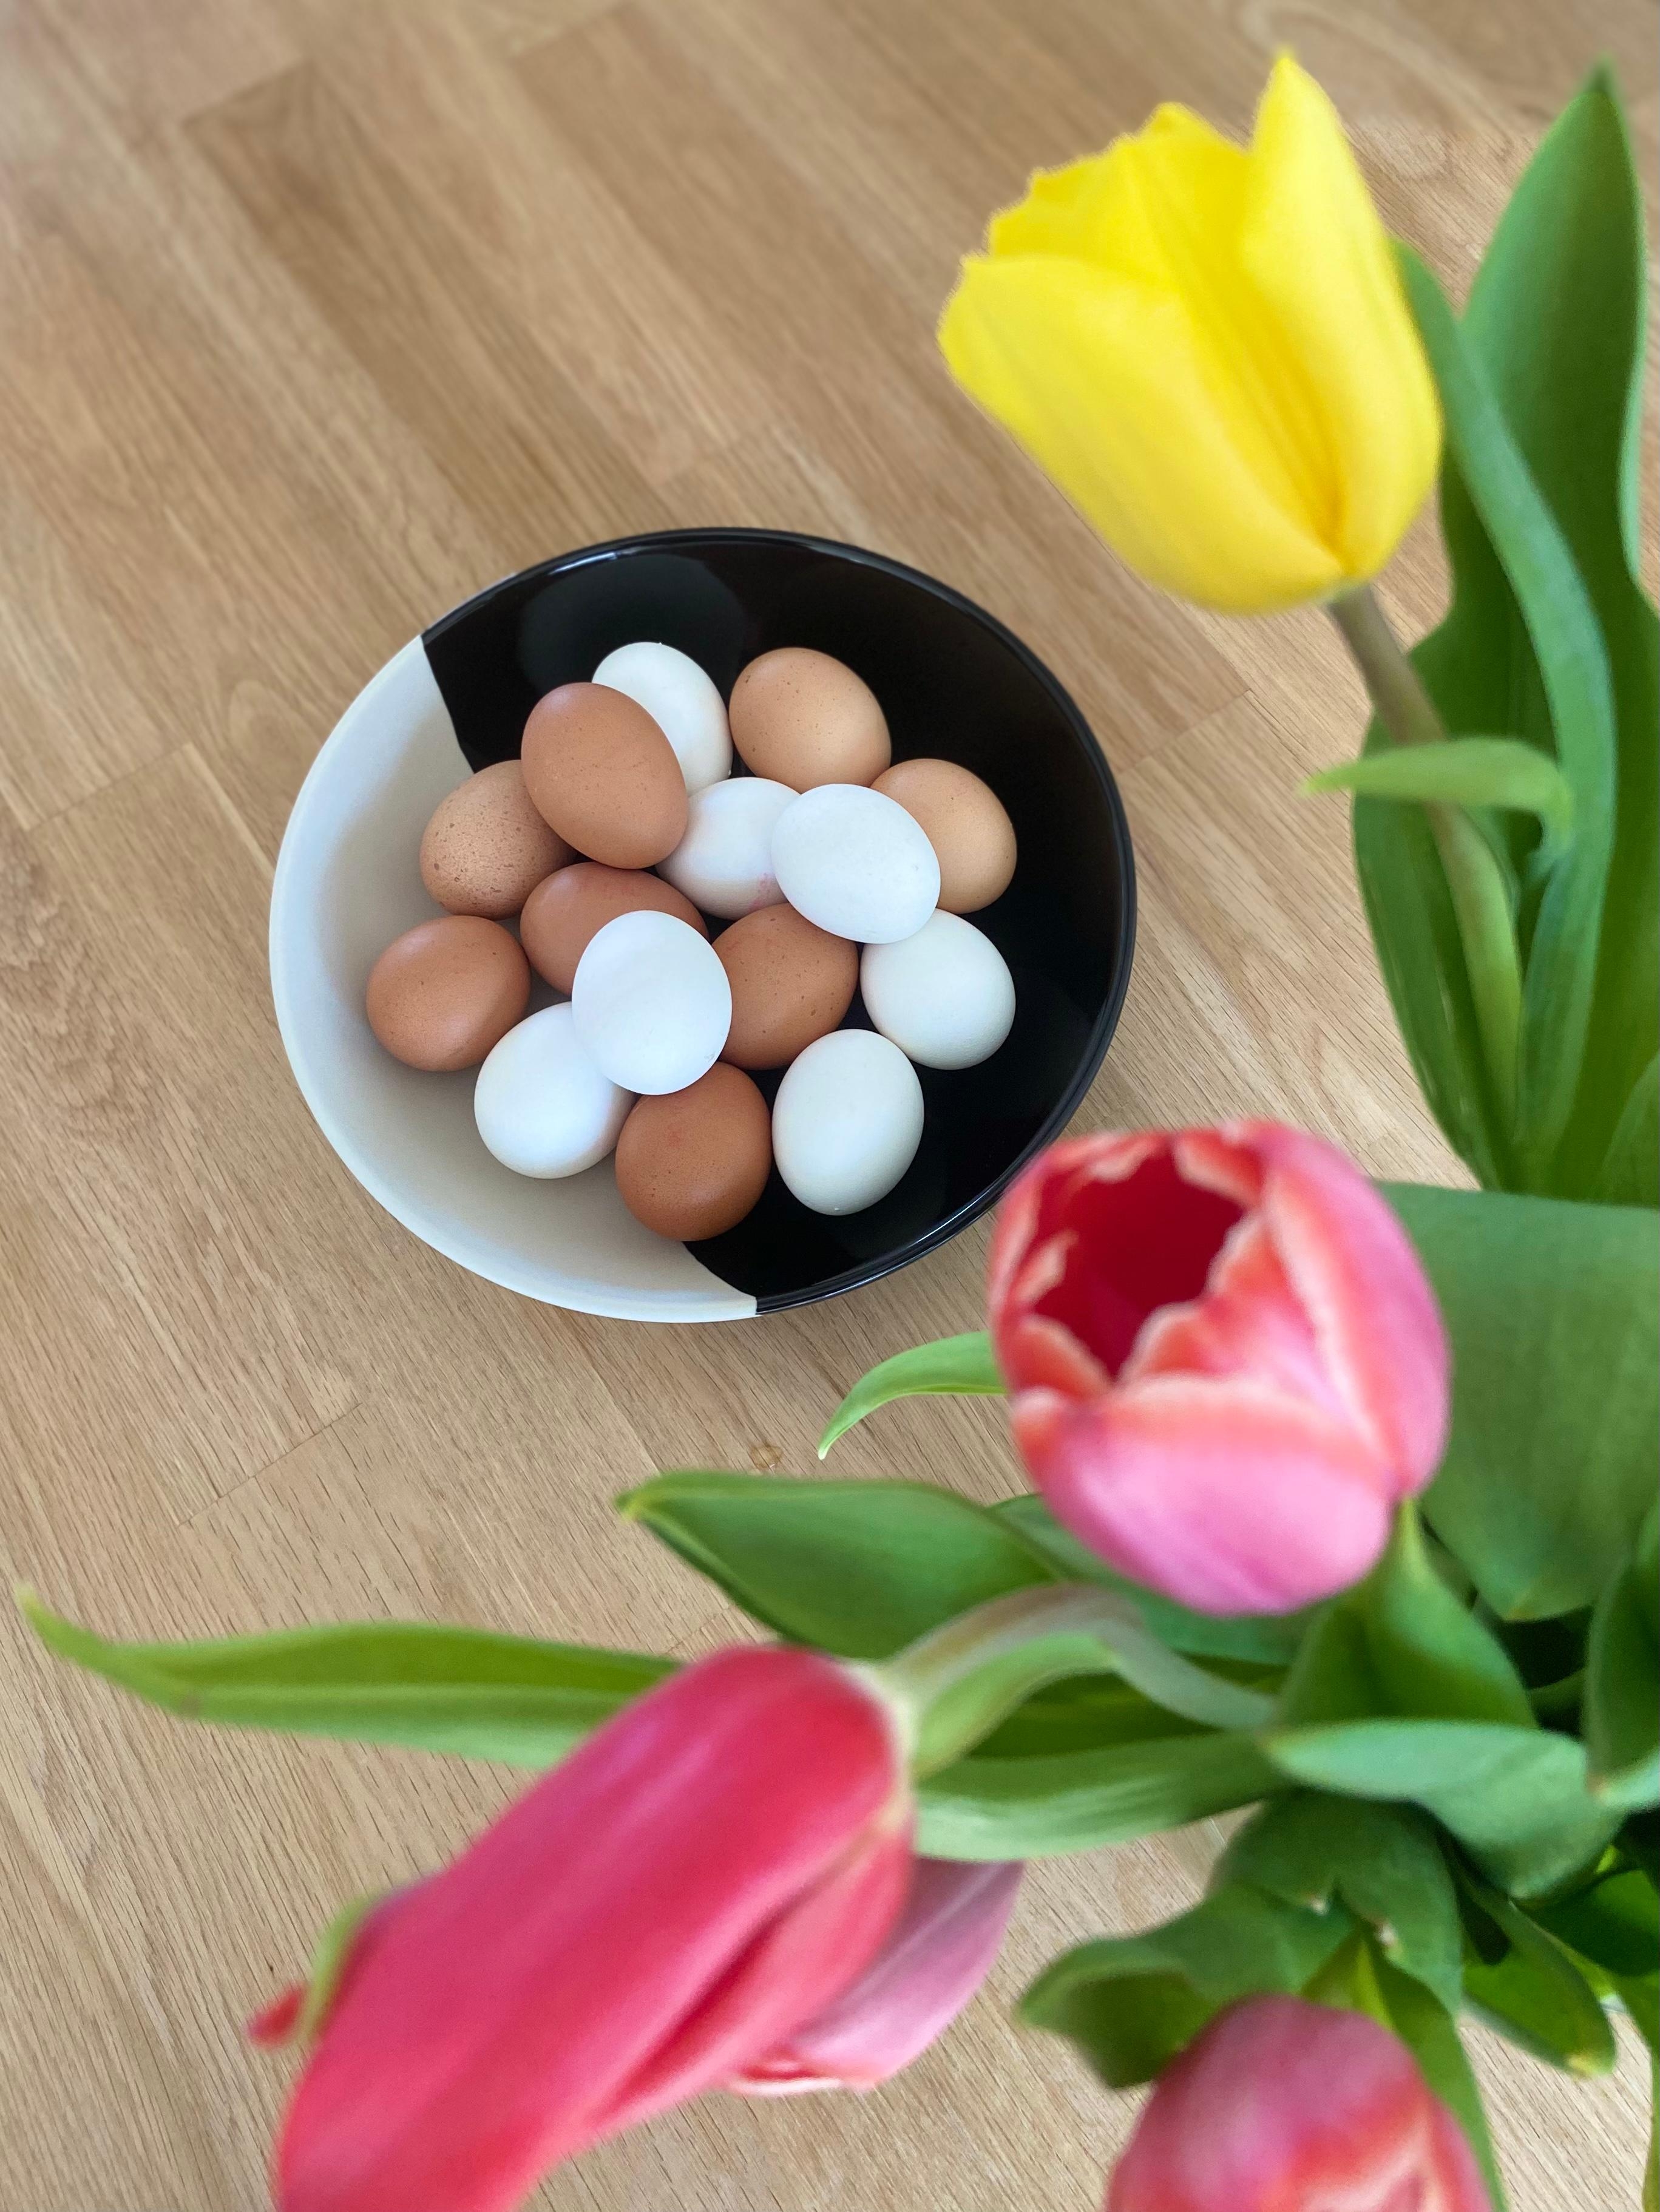 #osterdeko #eier #tulpen #frühling #april #hmhome #minimalismus #couchstyle 
